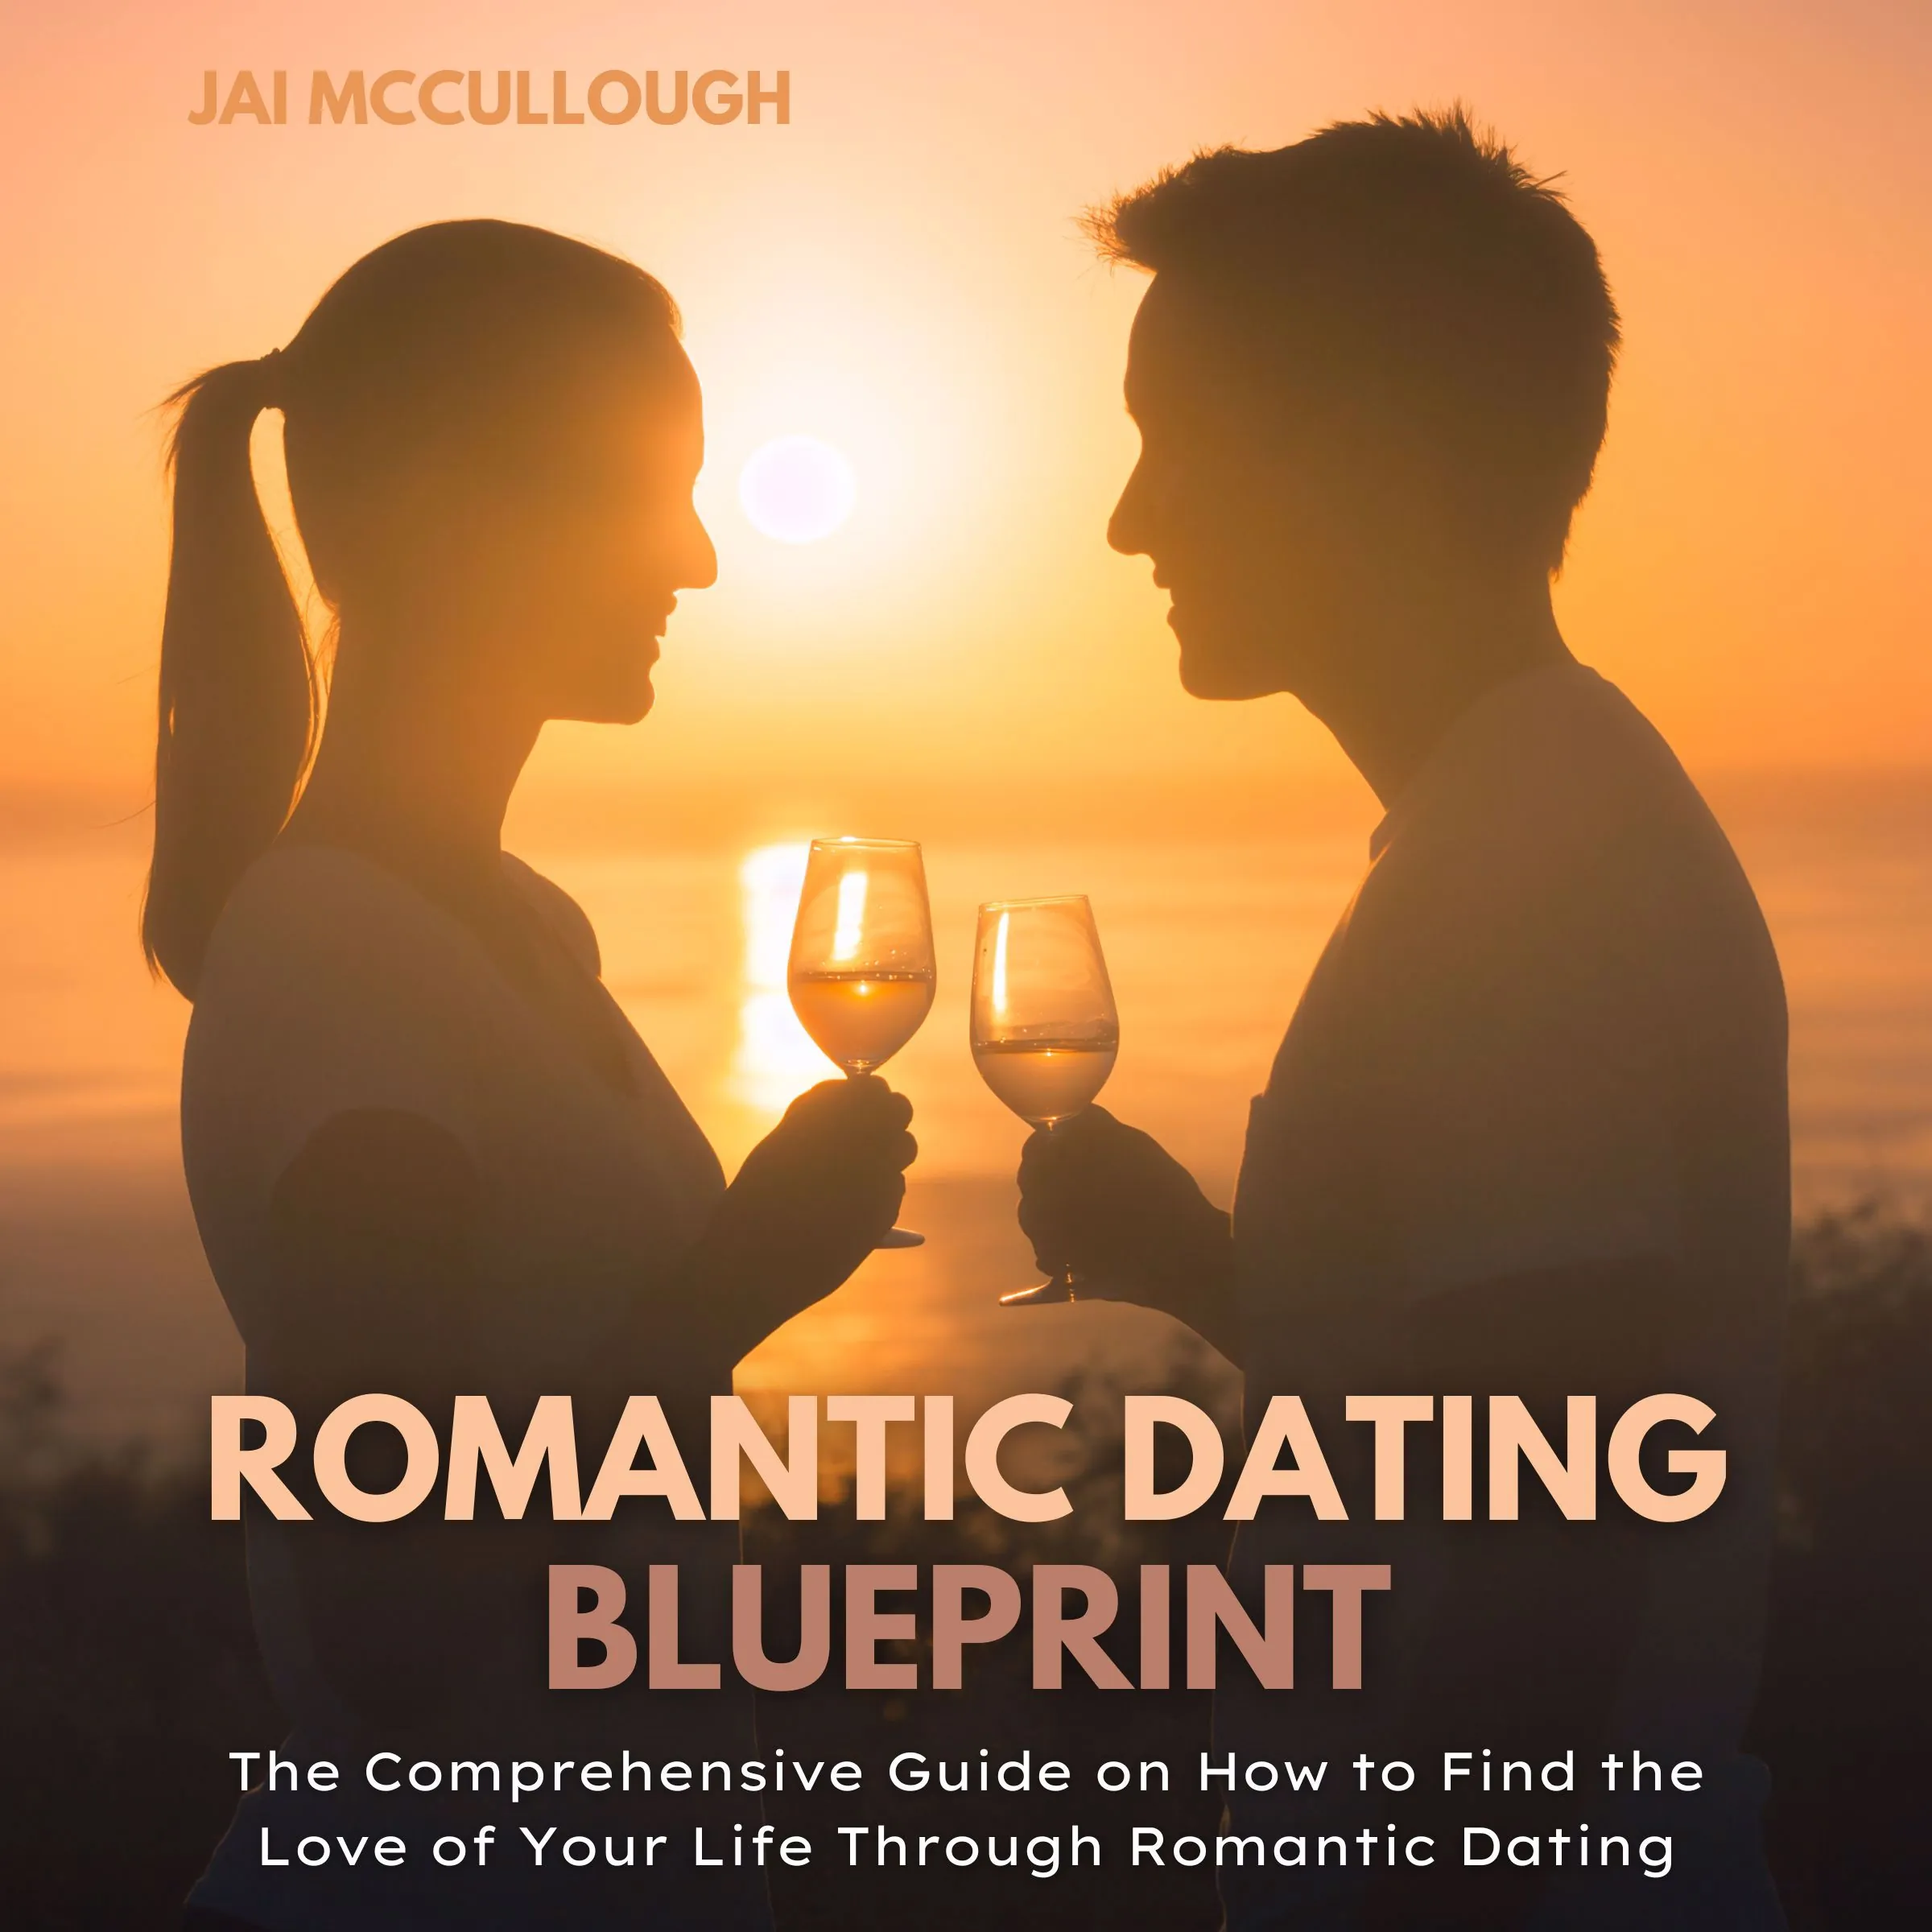 Romantic Dating Blueprint by Jai Mccullough Audiobook